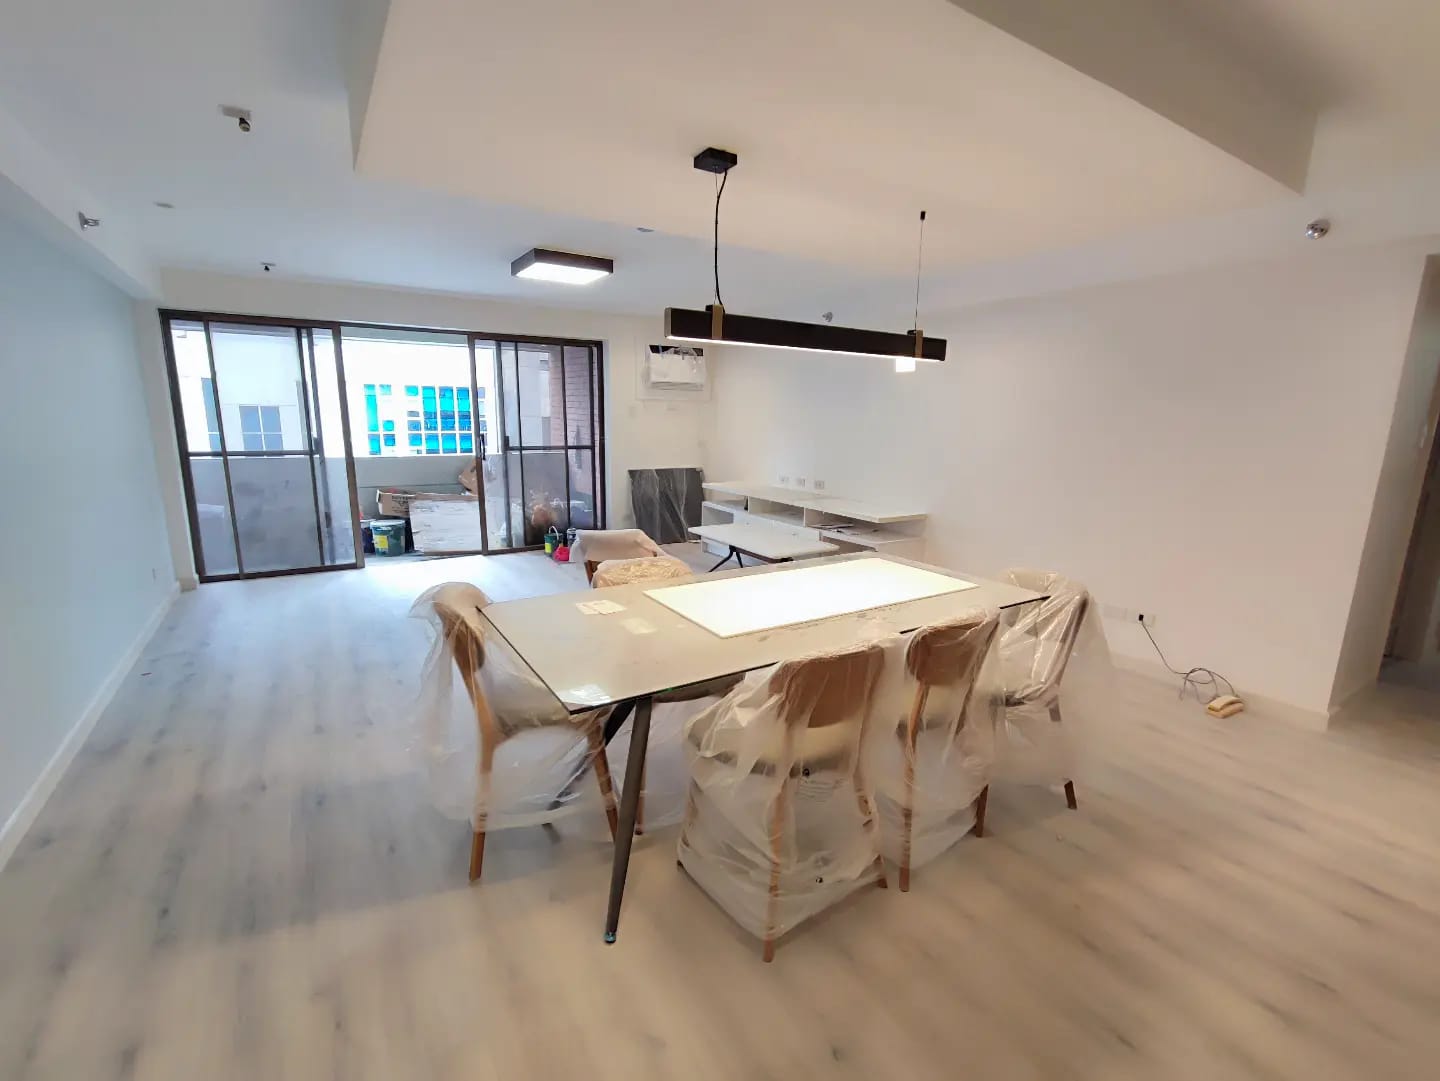 2Bedrooms Condo for Rent in Legaspi Village - modern renovated